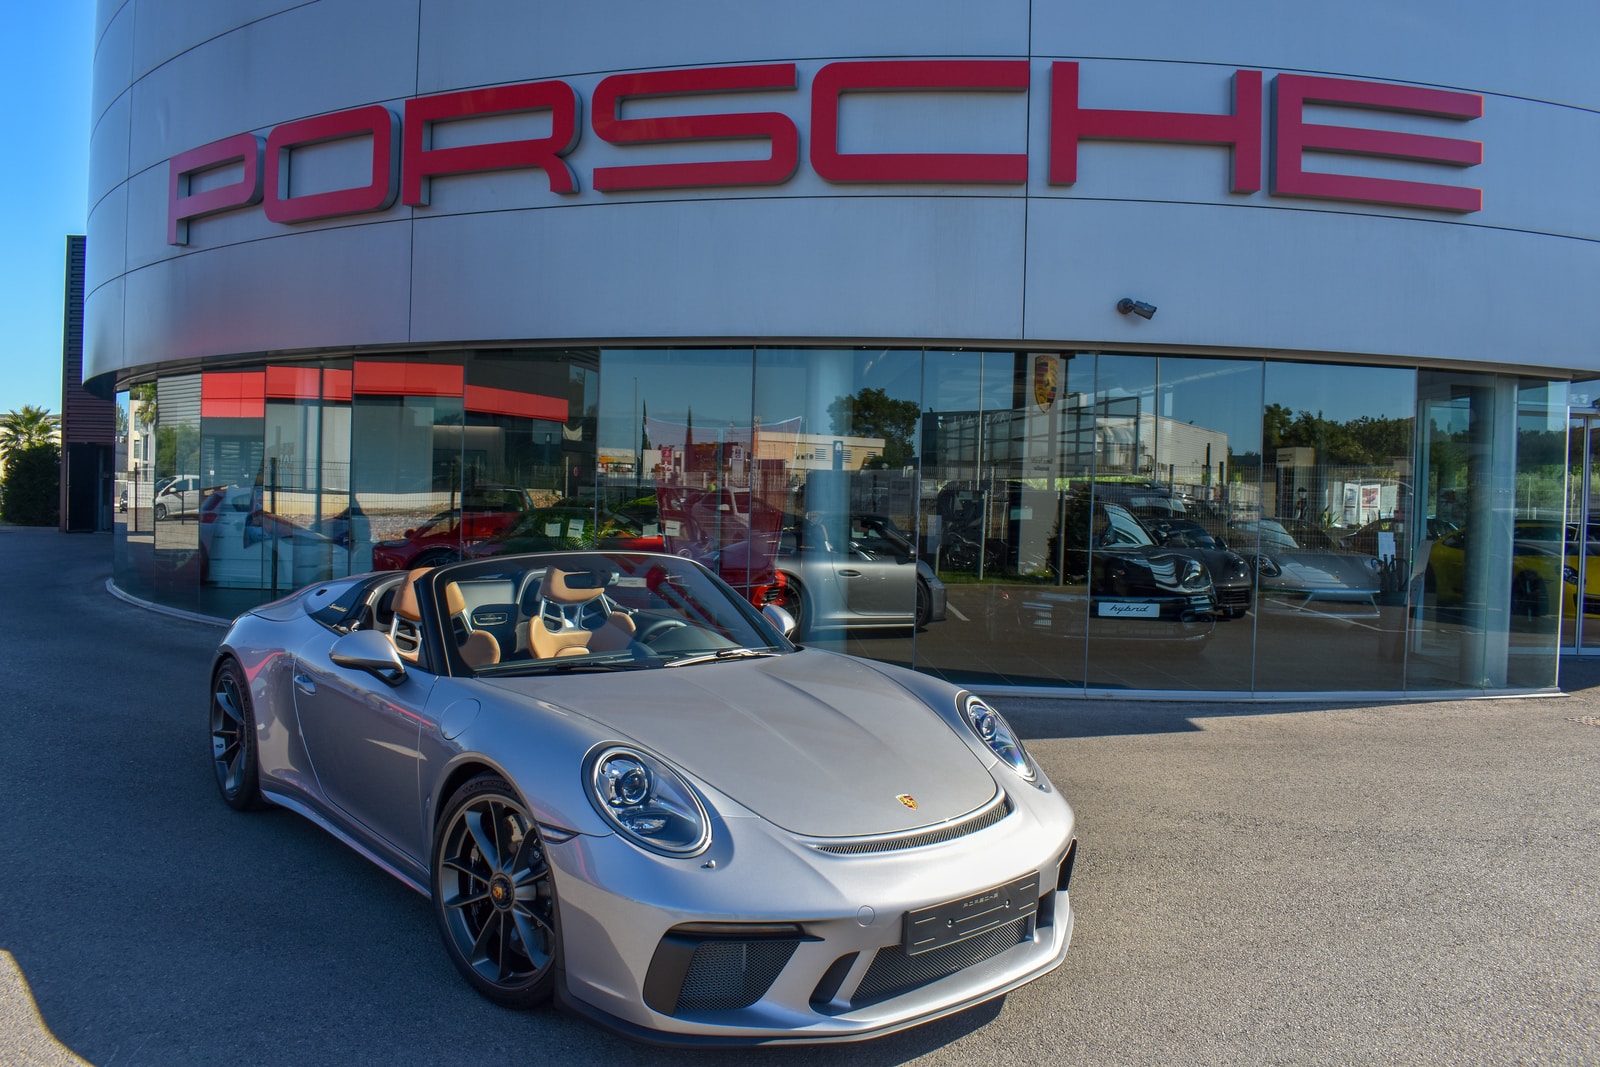 Porsche car dealership